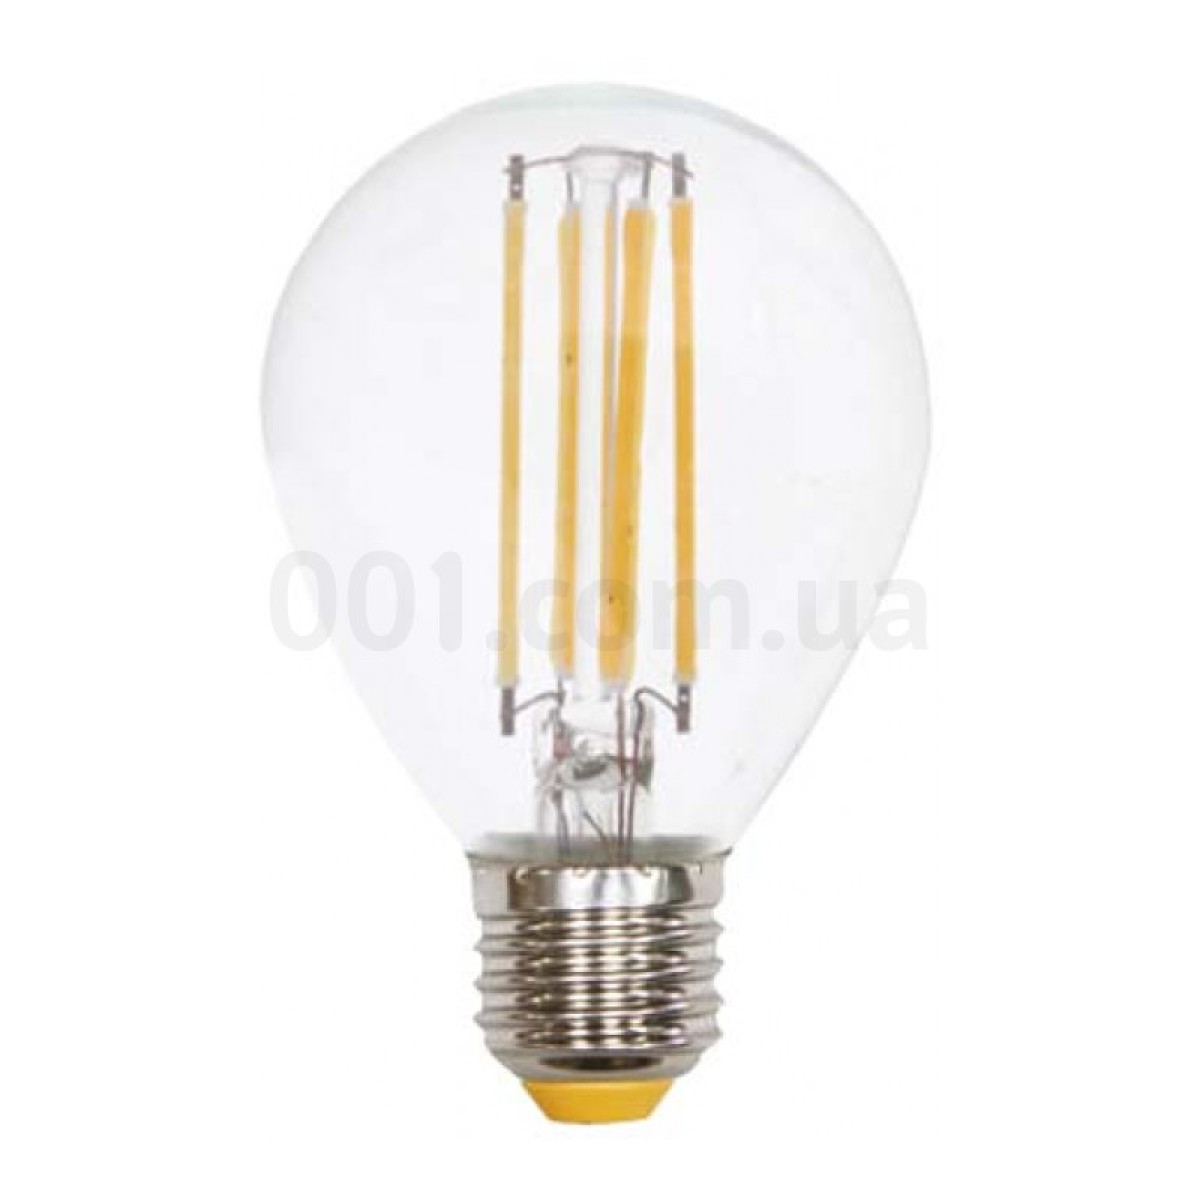 Светодиодная лампа LB-61 G45 (шар) филамент 4Вт 2700K E27, Feron 256_256.jpg